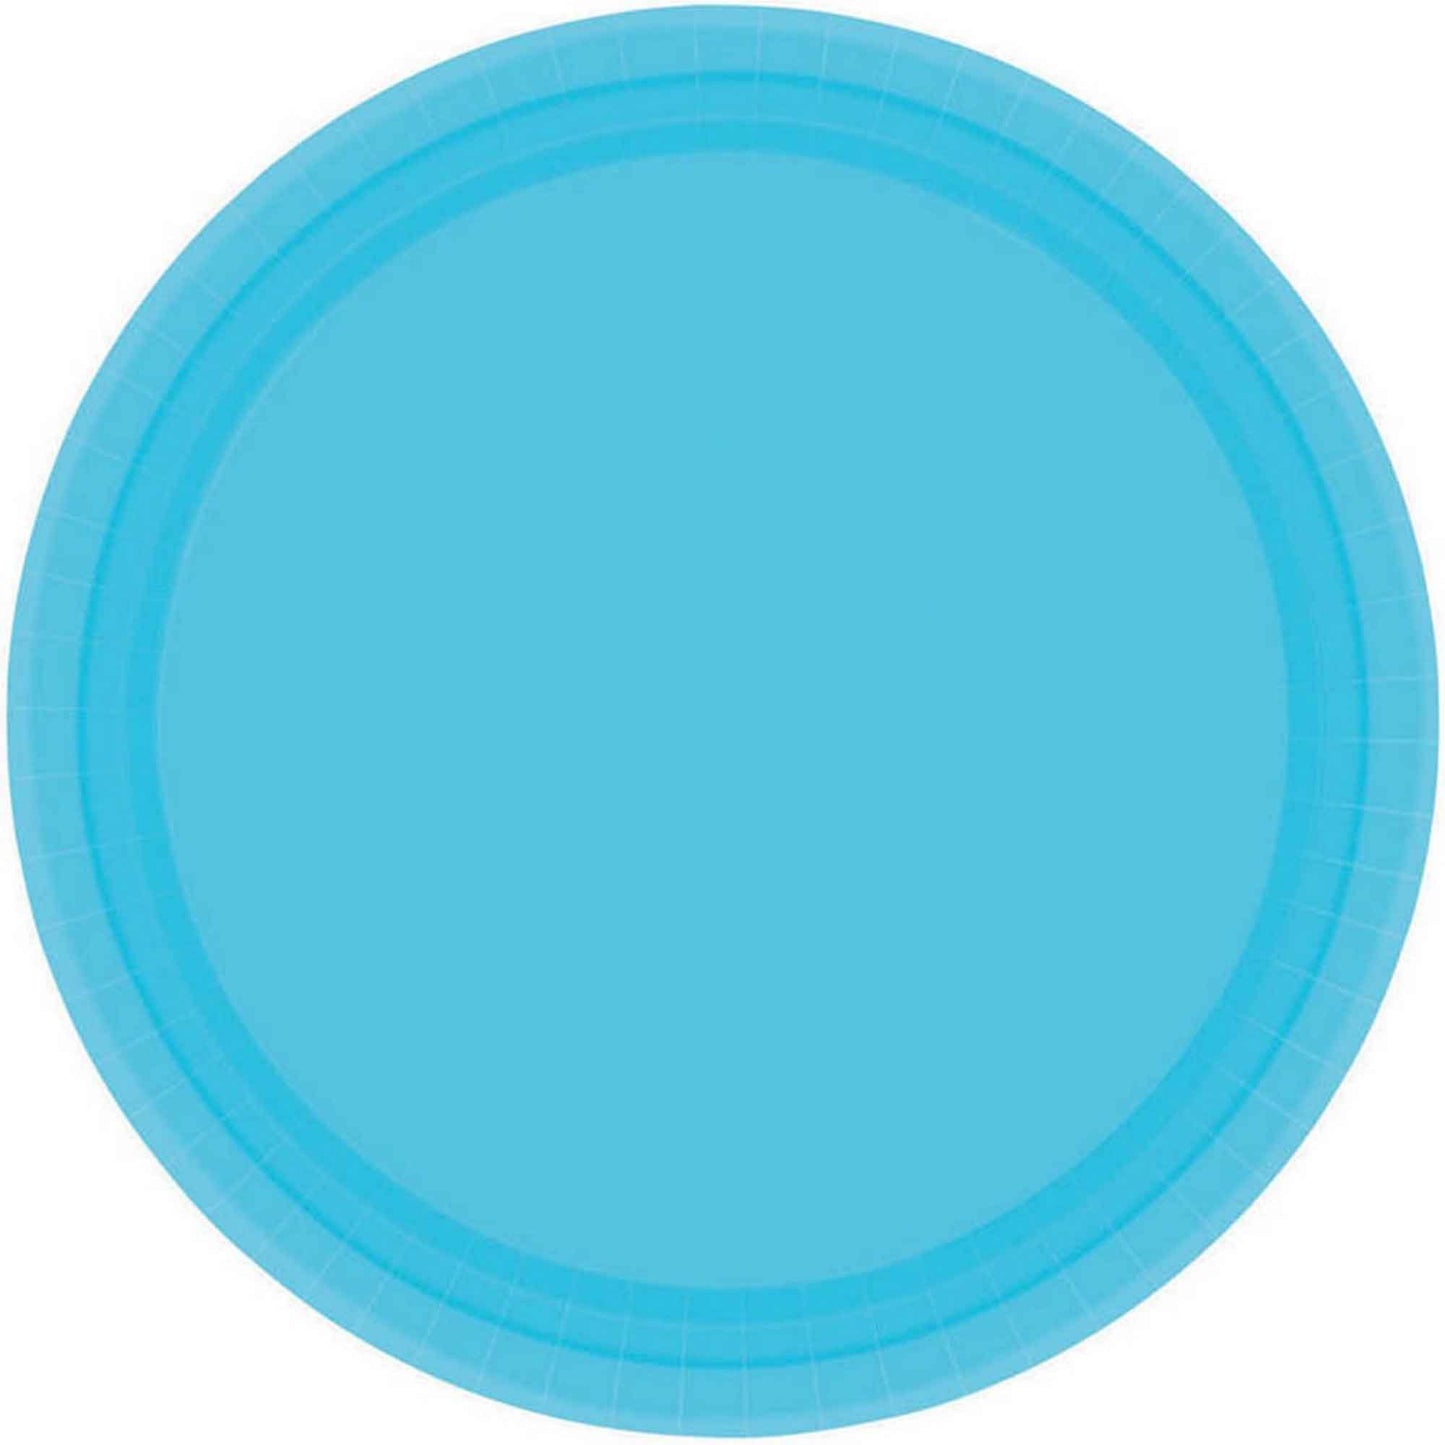 Paper Plates 17cm Round 20CT - Caribbean Blue NPC